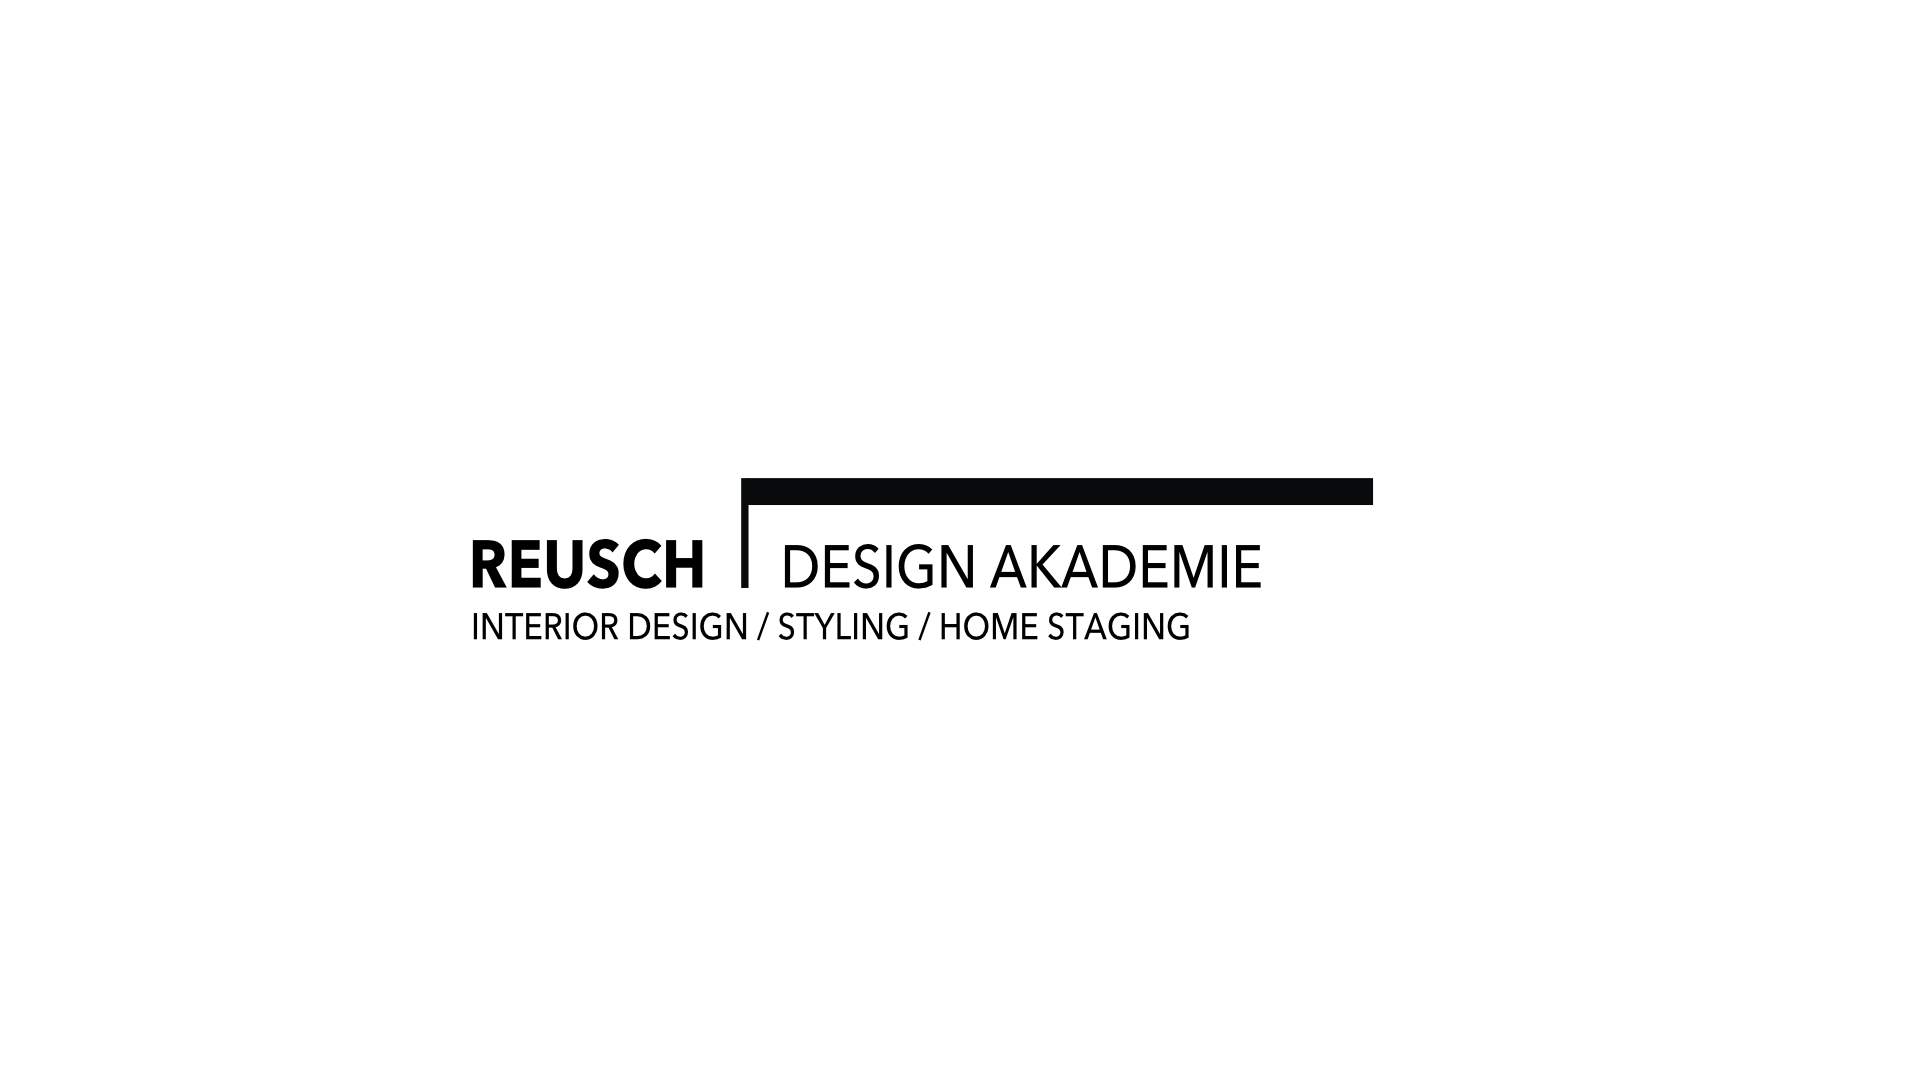 Reusch Design Akademie